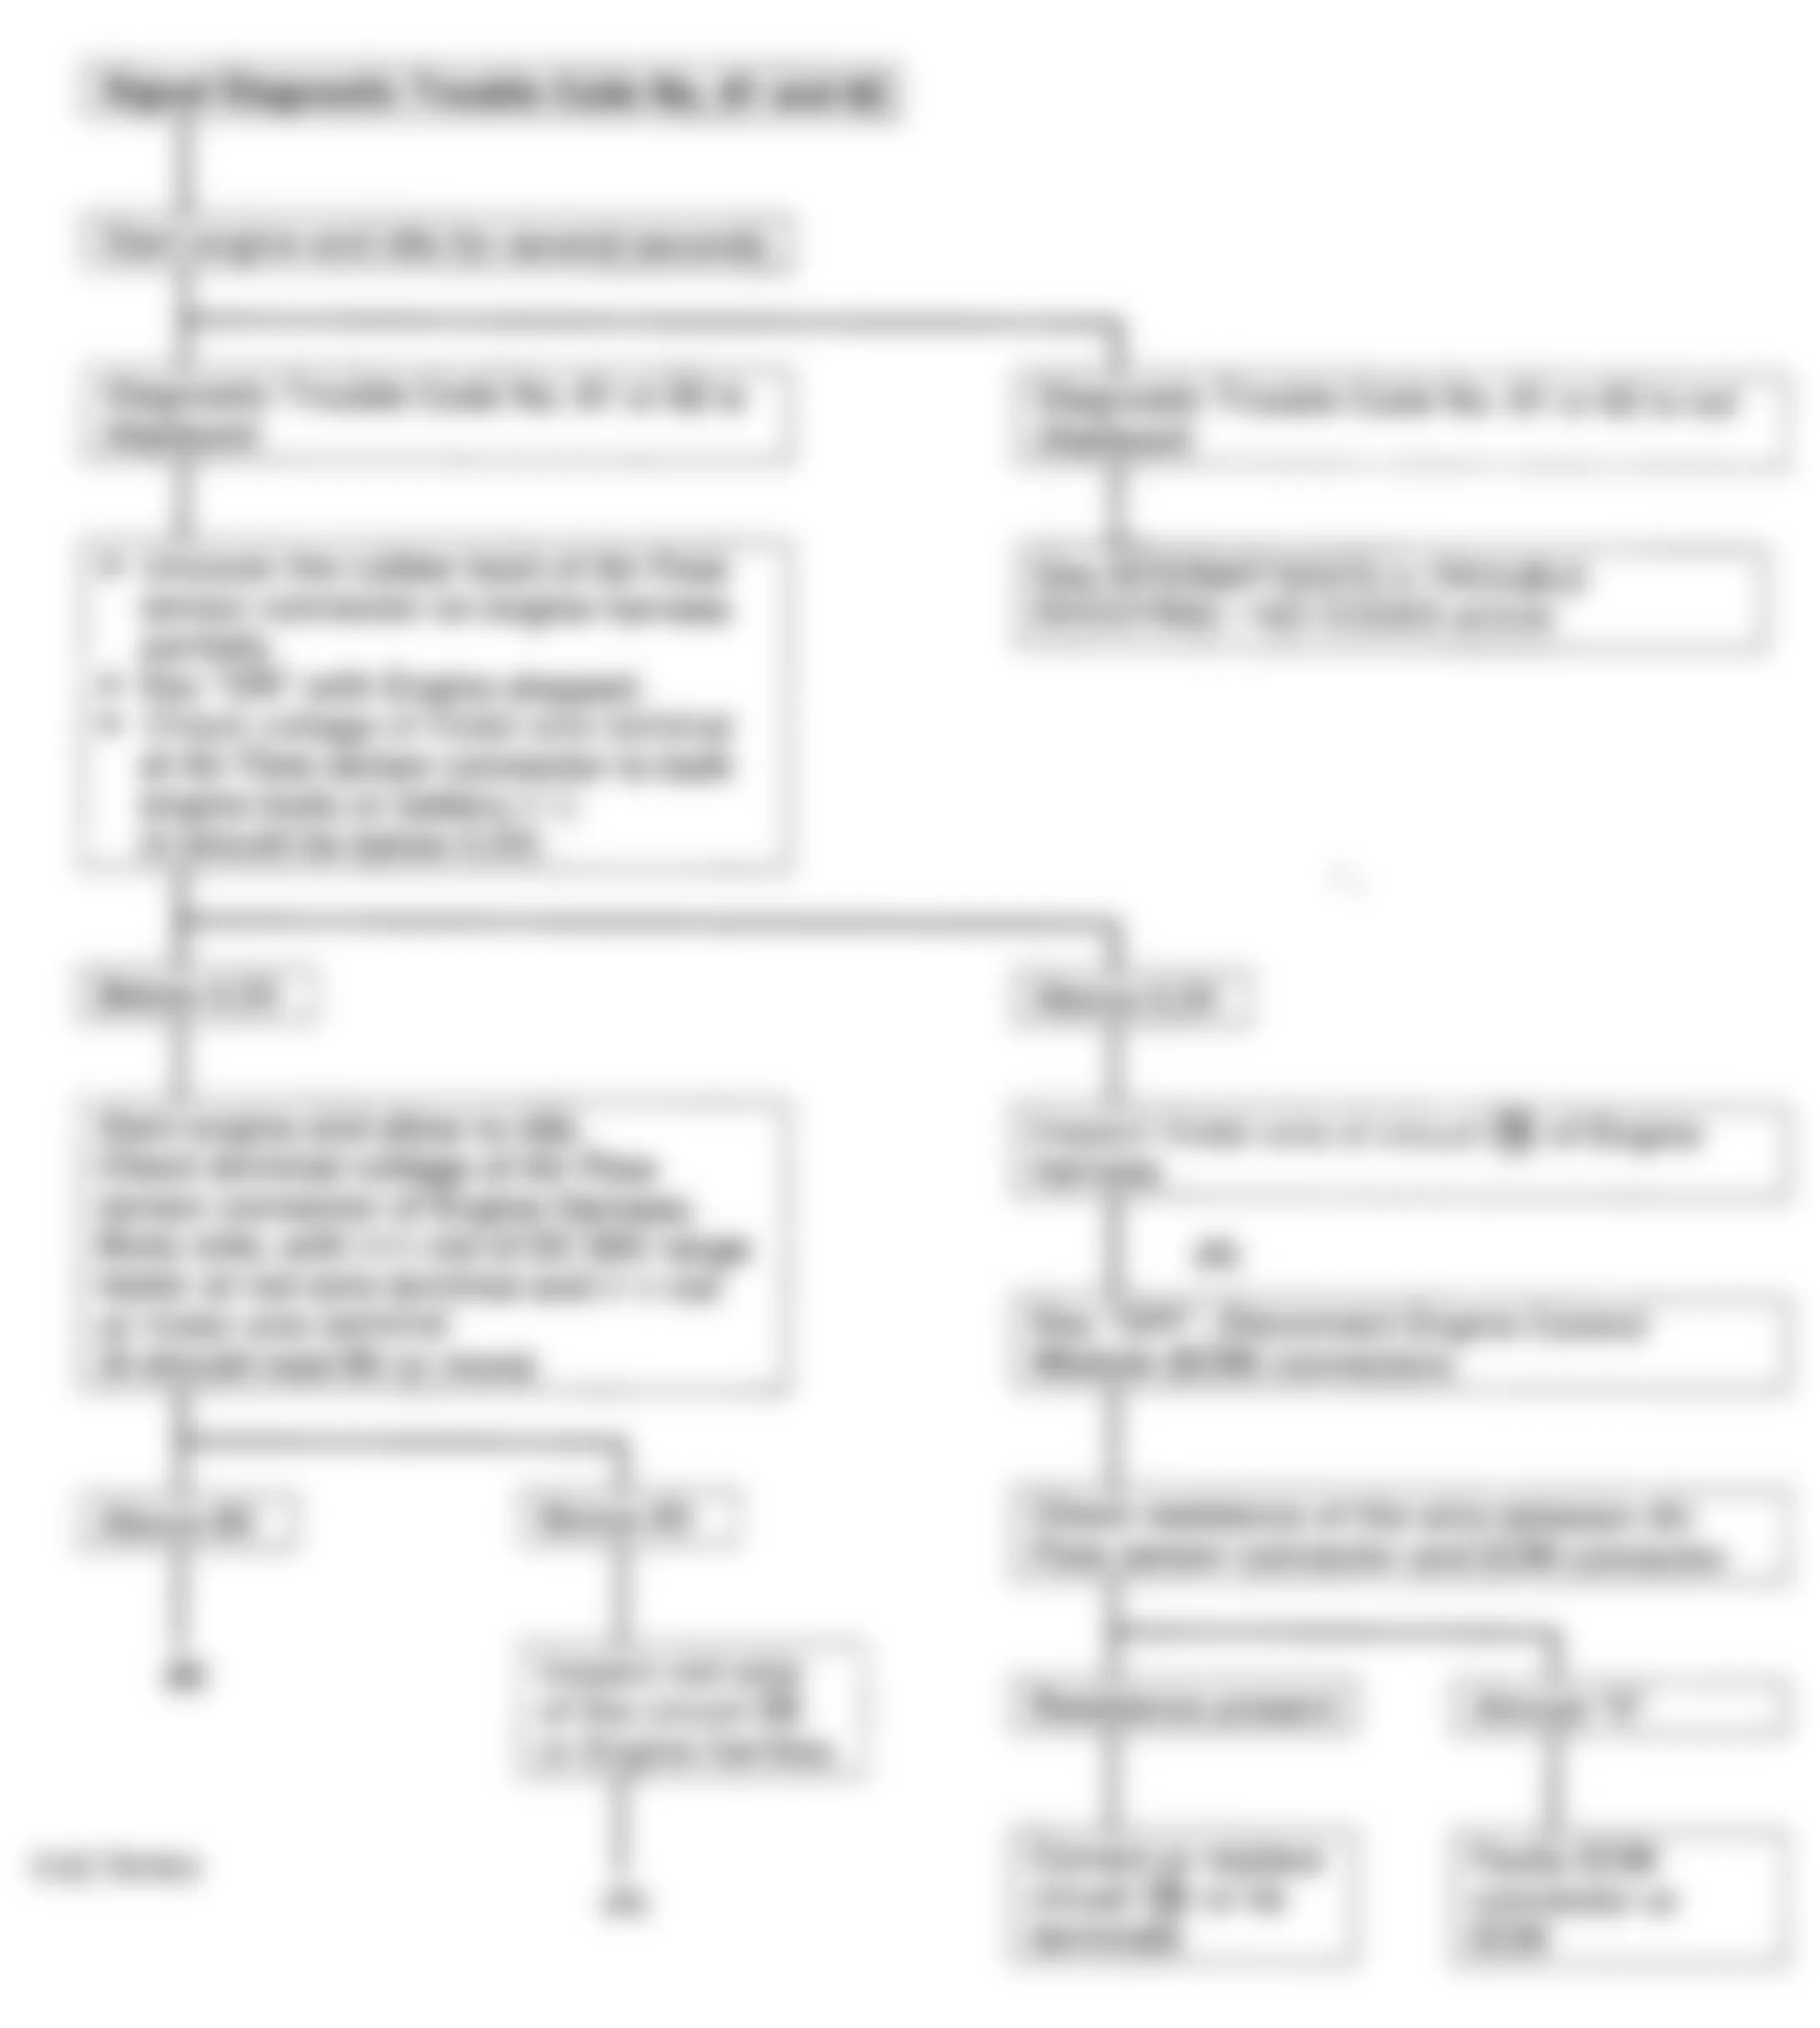 Isuzu Rodeo LS 1993 - Component Locations -  Code 61, 62 - Diagnostic Flowchart (1 Of 2) Courtesy Isuzu Motor Co